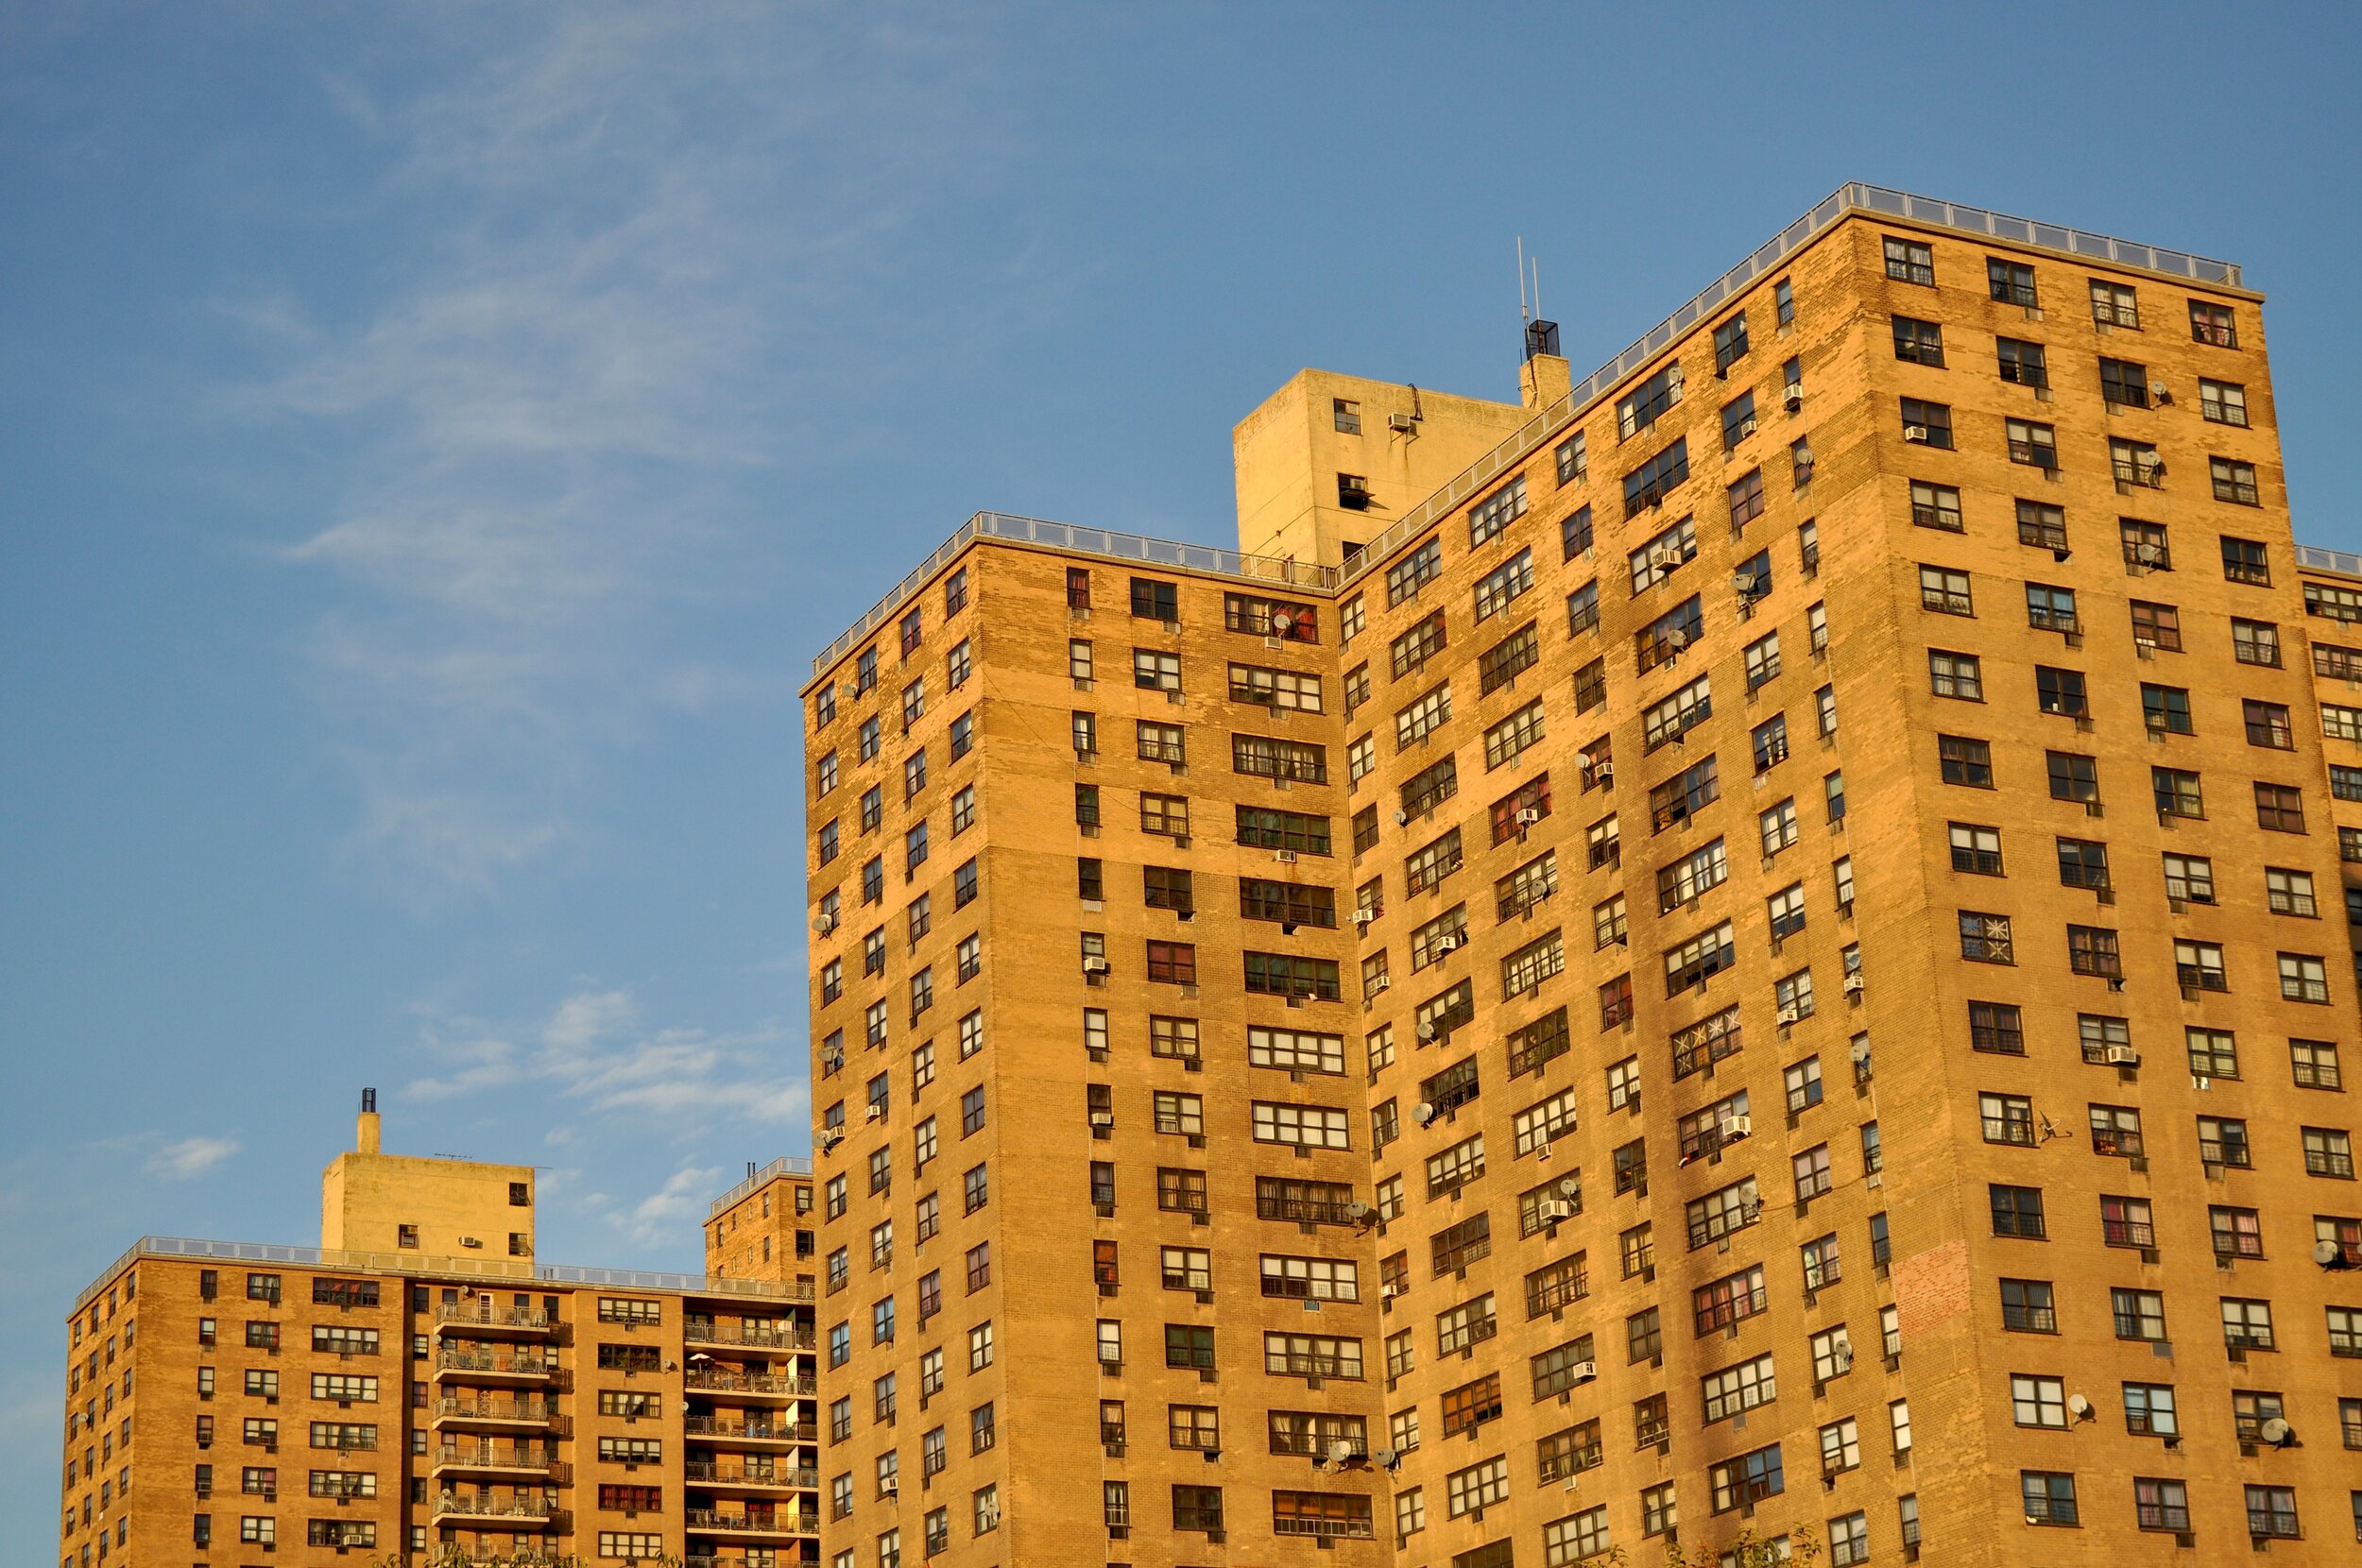 Ebbets Field Apartments - Brooklyn, New York (2011)